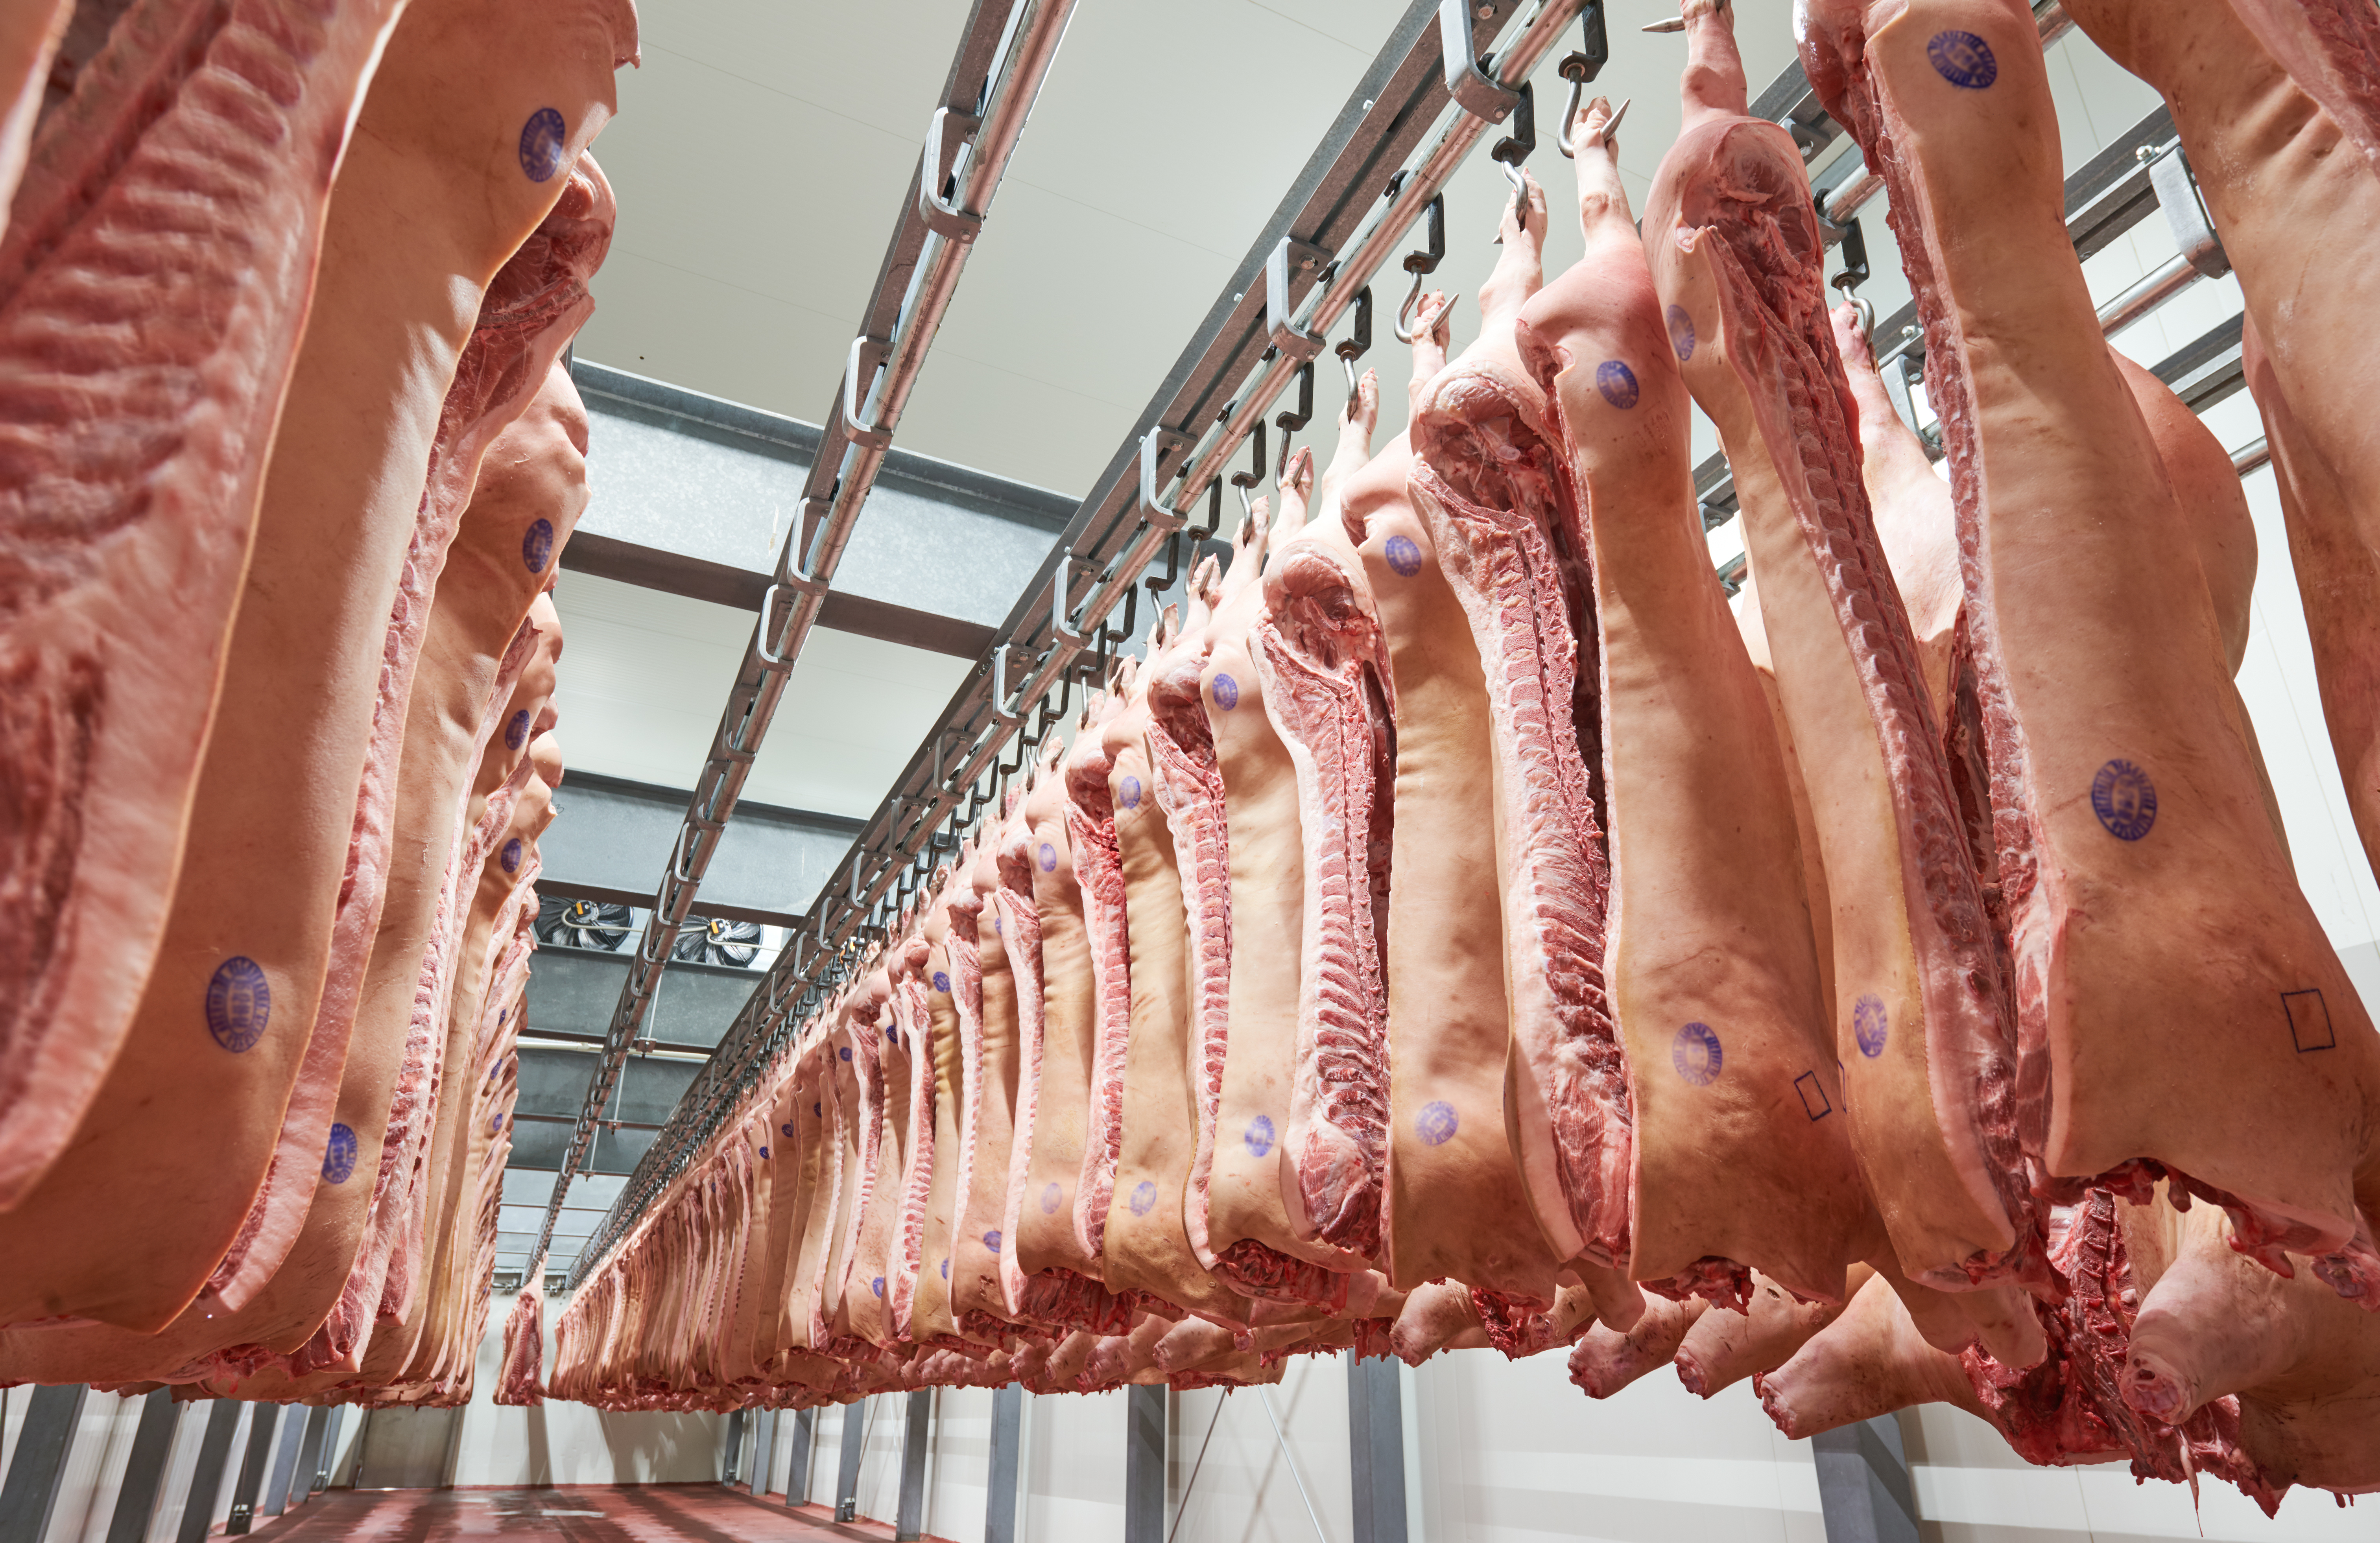 Frozen pork sides hanging in a butcher's freezer